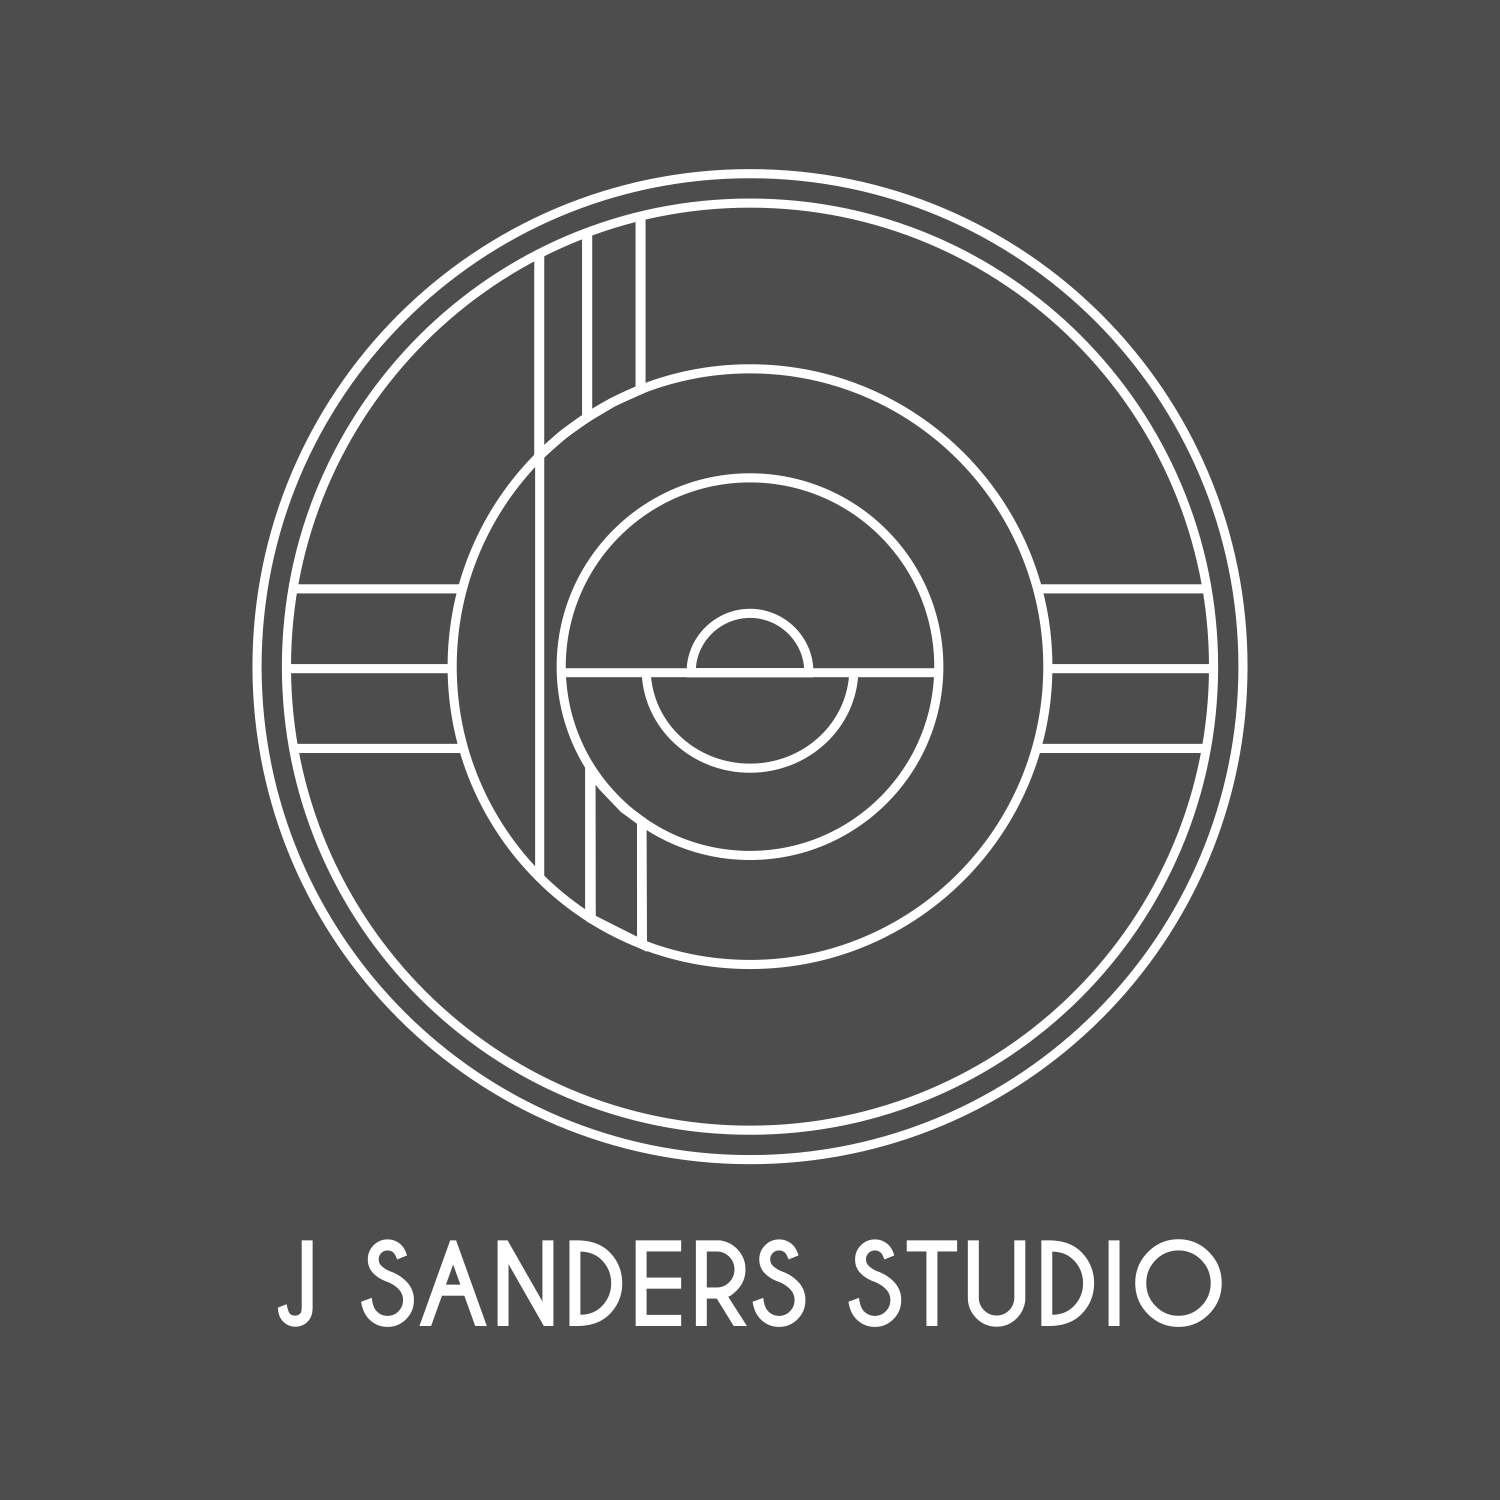 J Sanders Studio